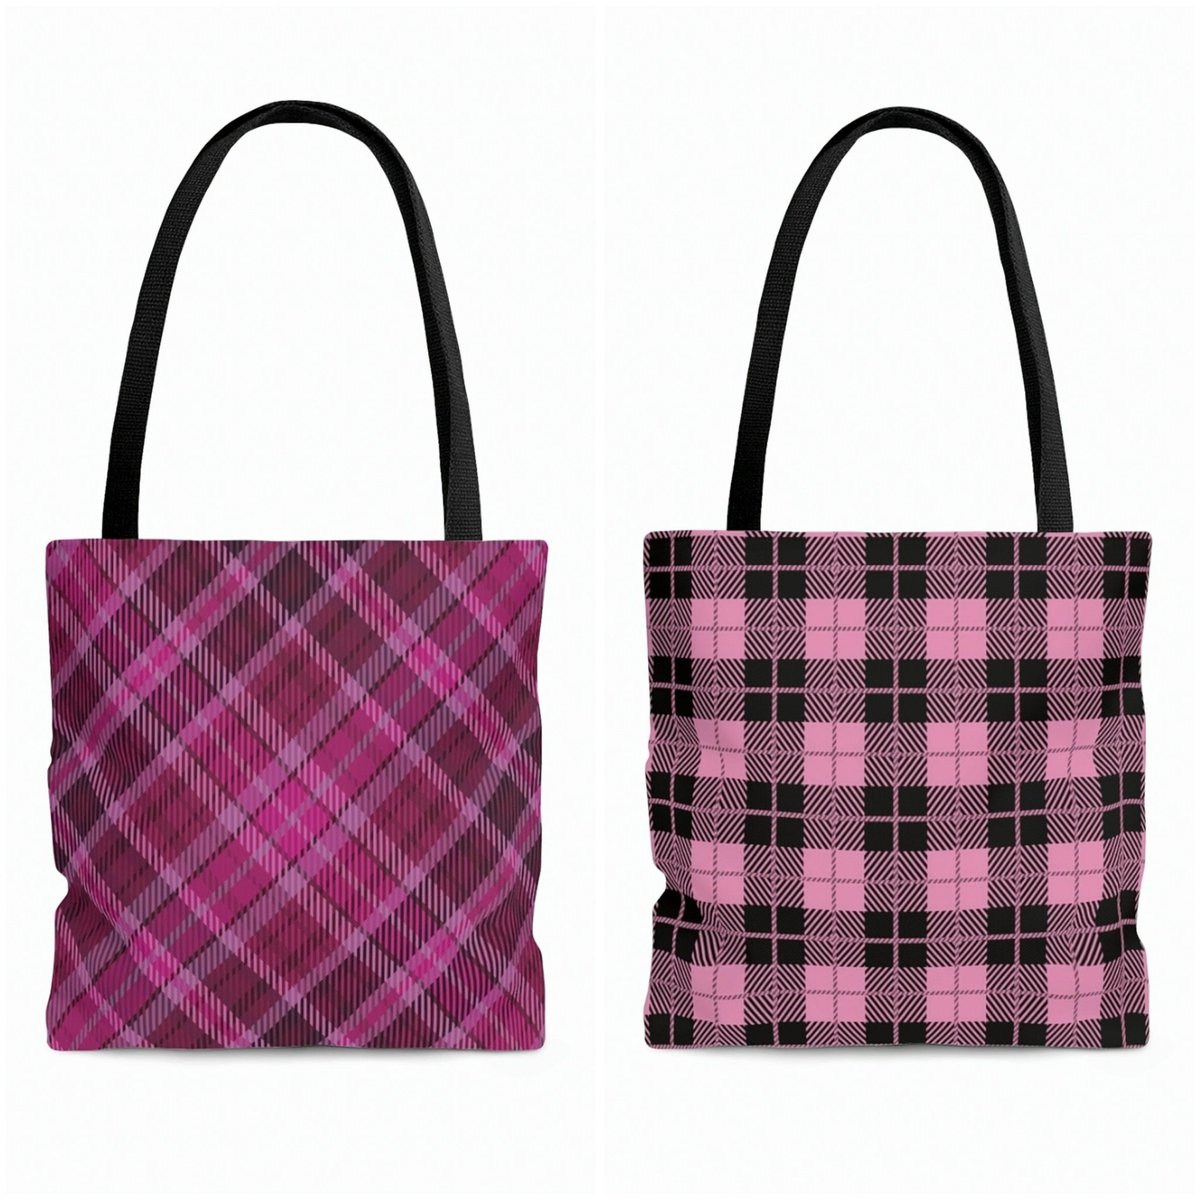 I've just added 2 new tote bags  to my shop! Please take a look!  Thank you! 

🌵 Etsy.com/shop/DesertGir…

#totebag #totebags #shoulderbag #giftforwomen #tote #totes #carryall #patternedtote #shoppingbag #grocerybag  #womenstotebag #colorfultotebag #pinktotebag #hotpink